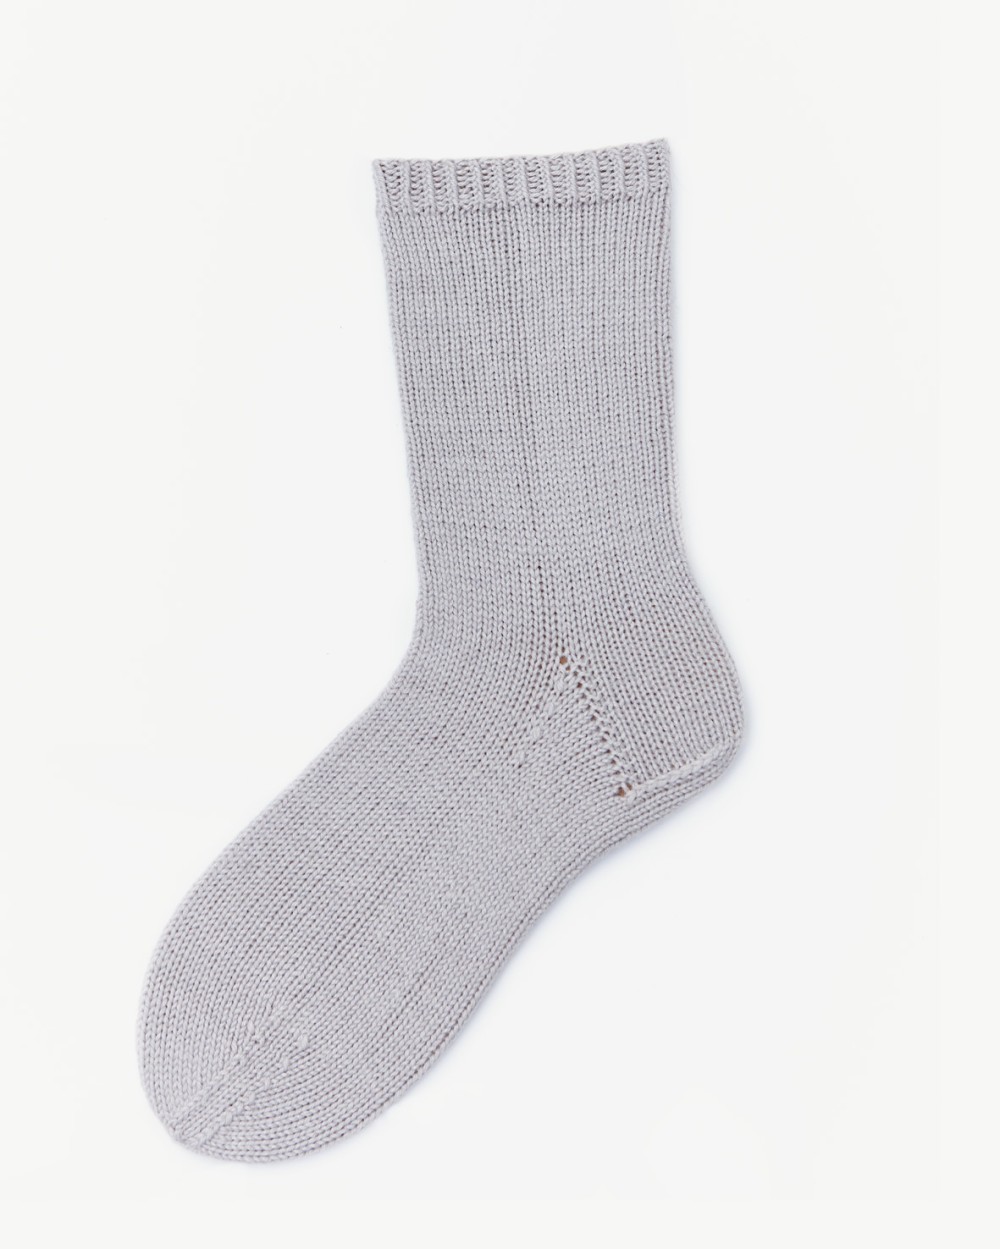 LAMANA Grundanleitung für MERIDA-Socken + Maßtabelle S/01